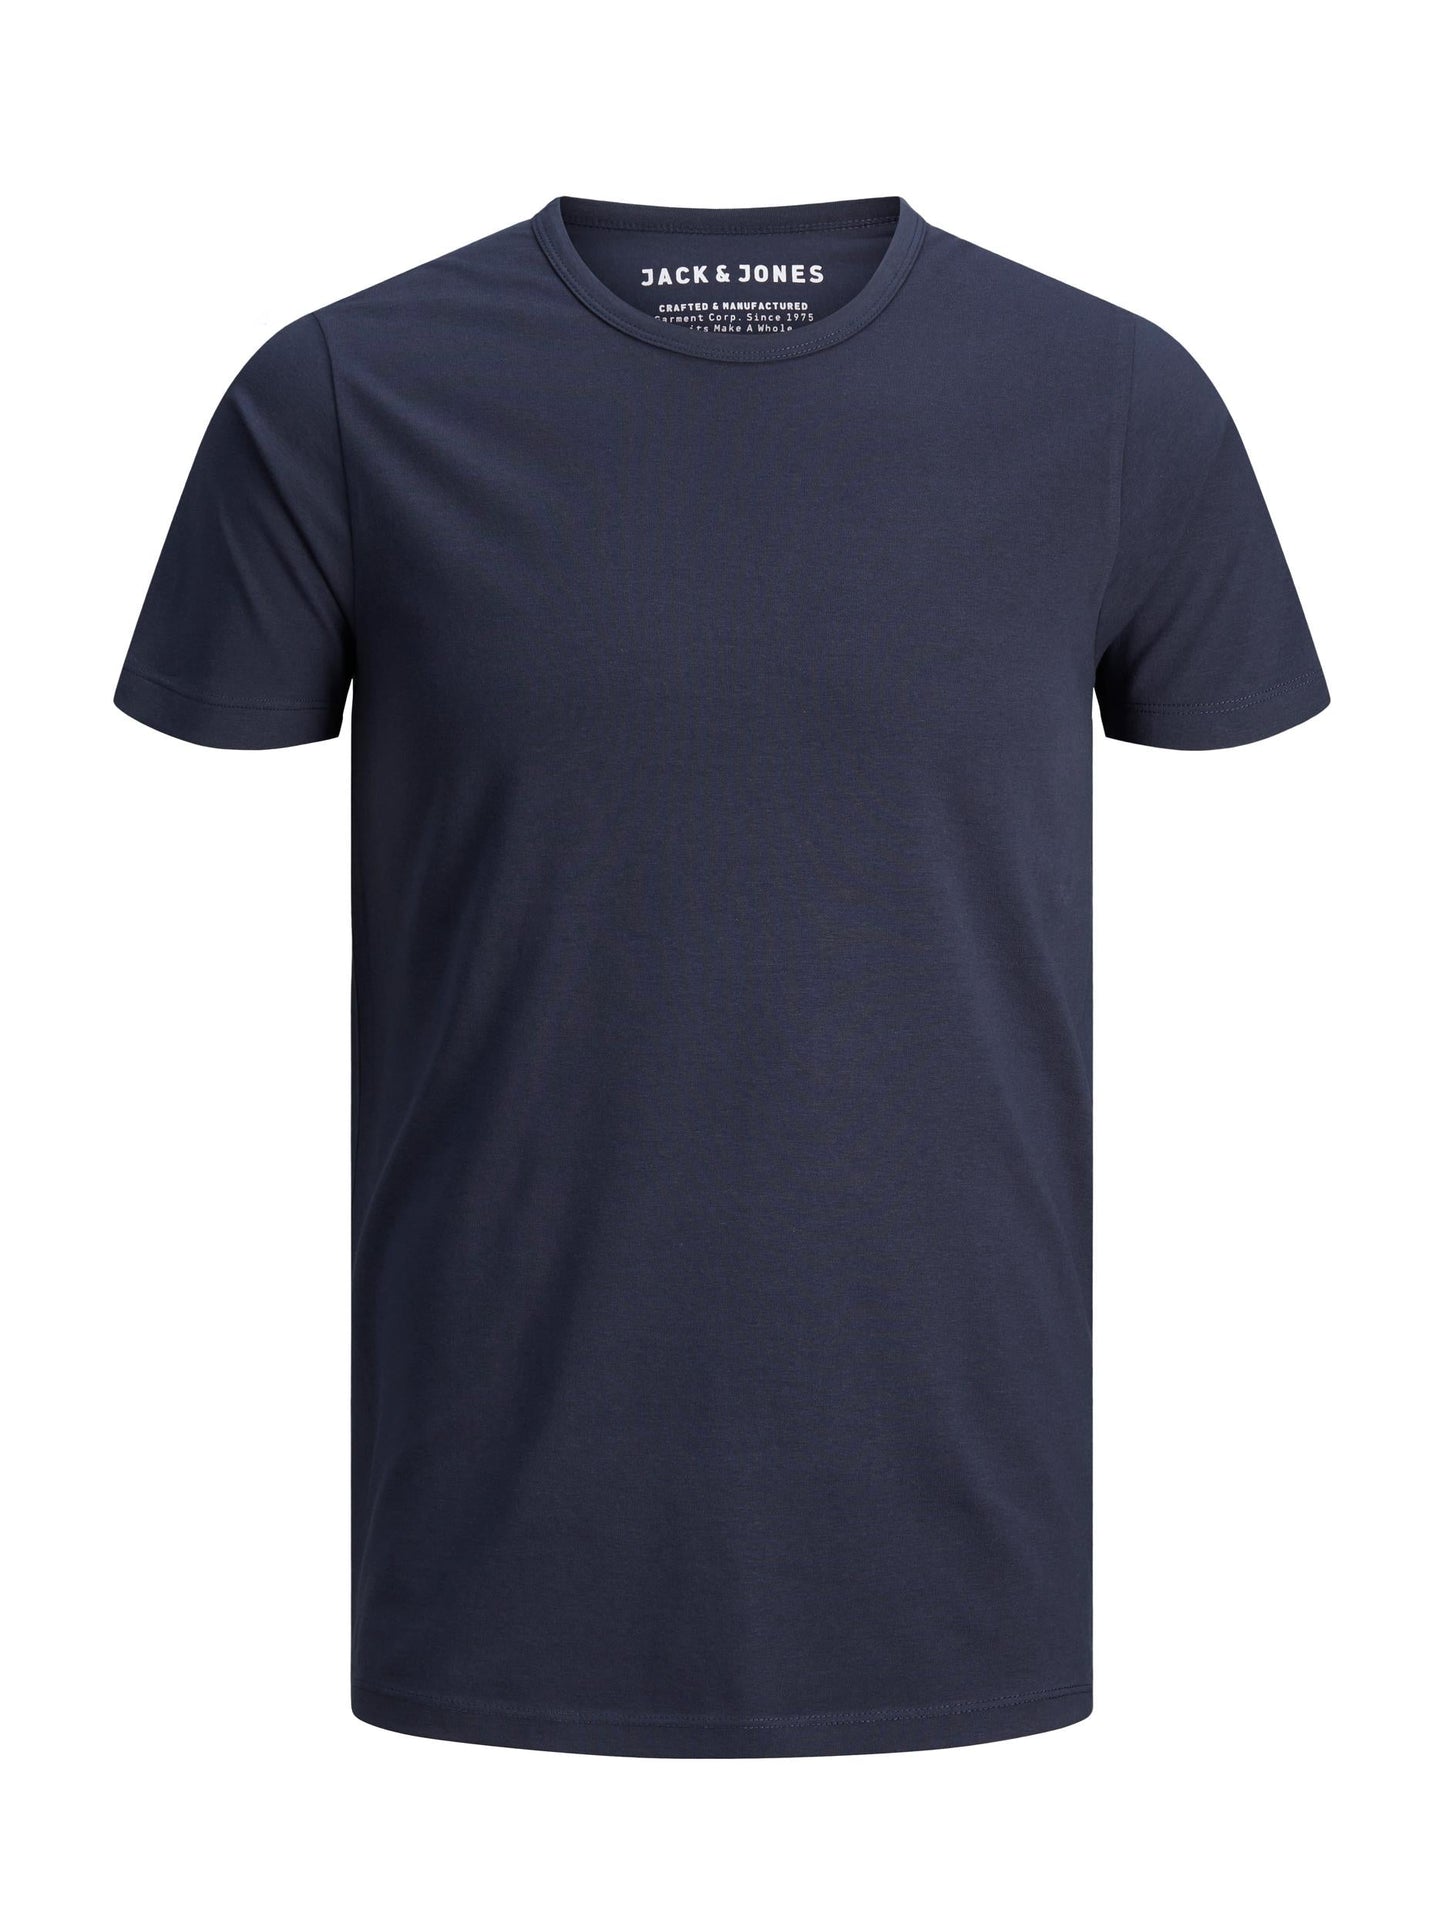 T-shirt Jack & Jones O-Neck Navy Blue